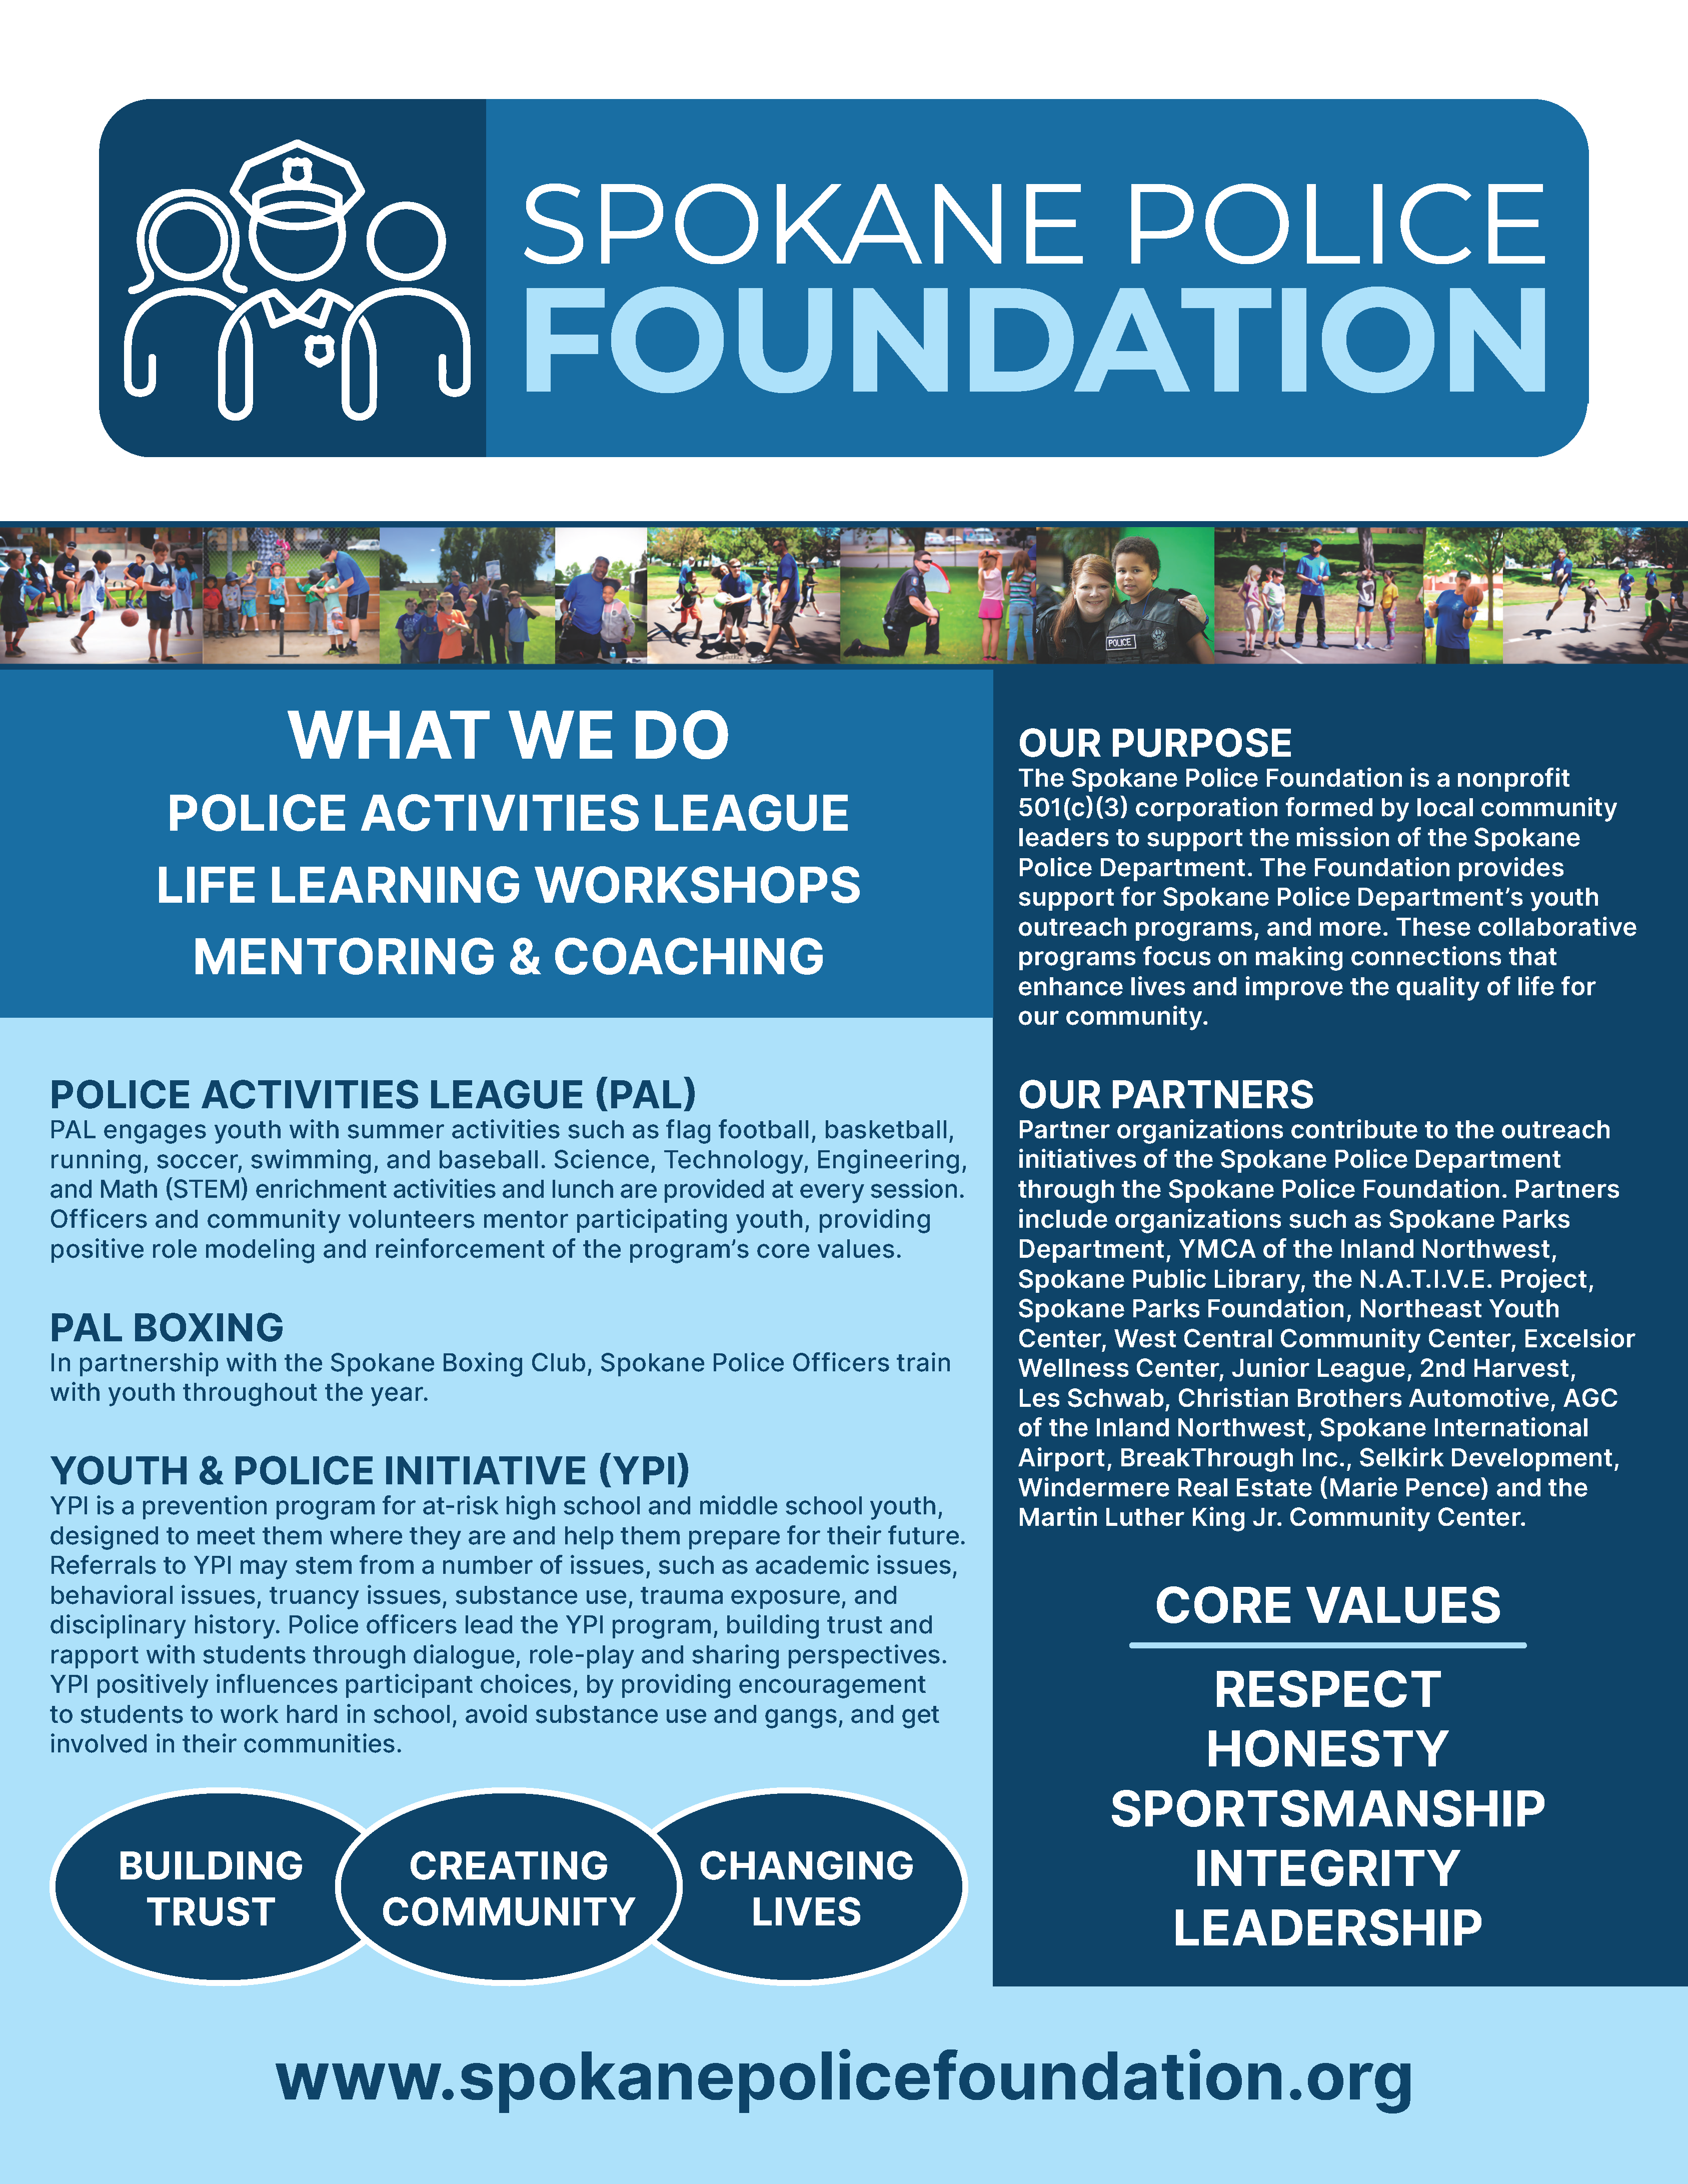 Spokane Police Foundation About Us Sheet 2022